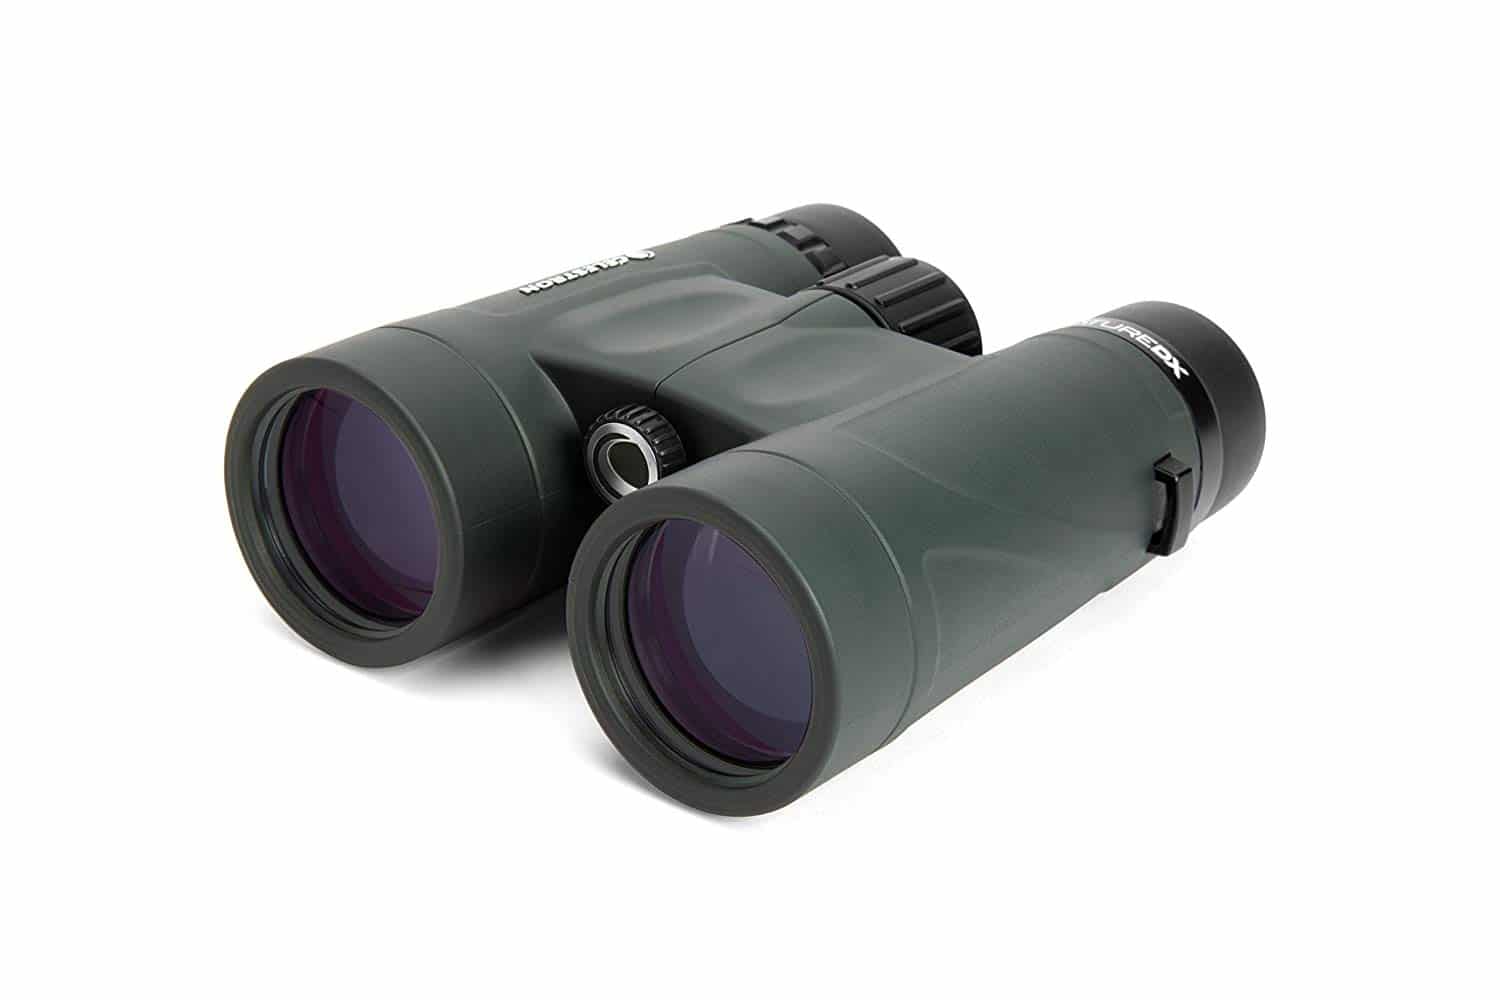 celestron 71332 nature dx 8x42 binocular review: best travel binoculars